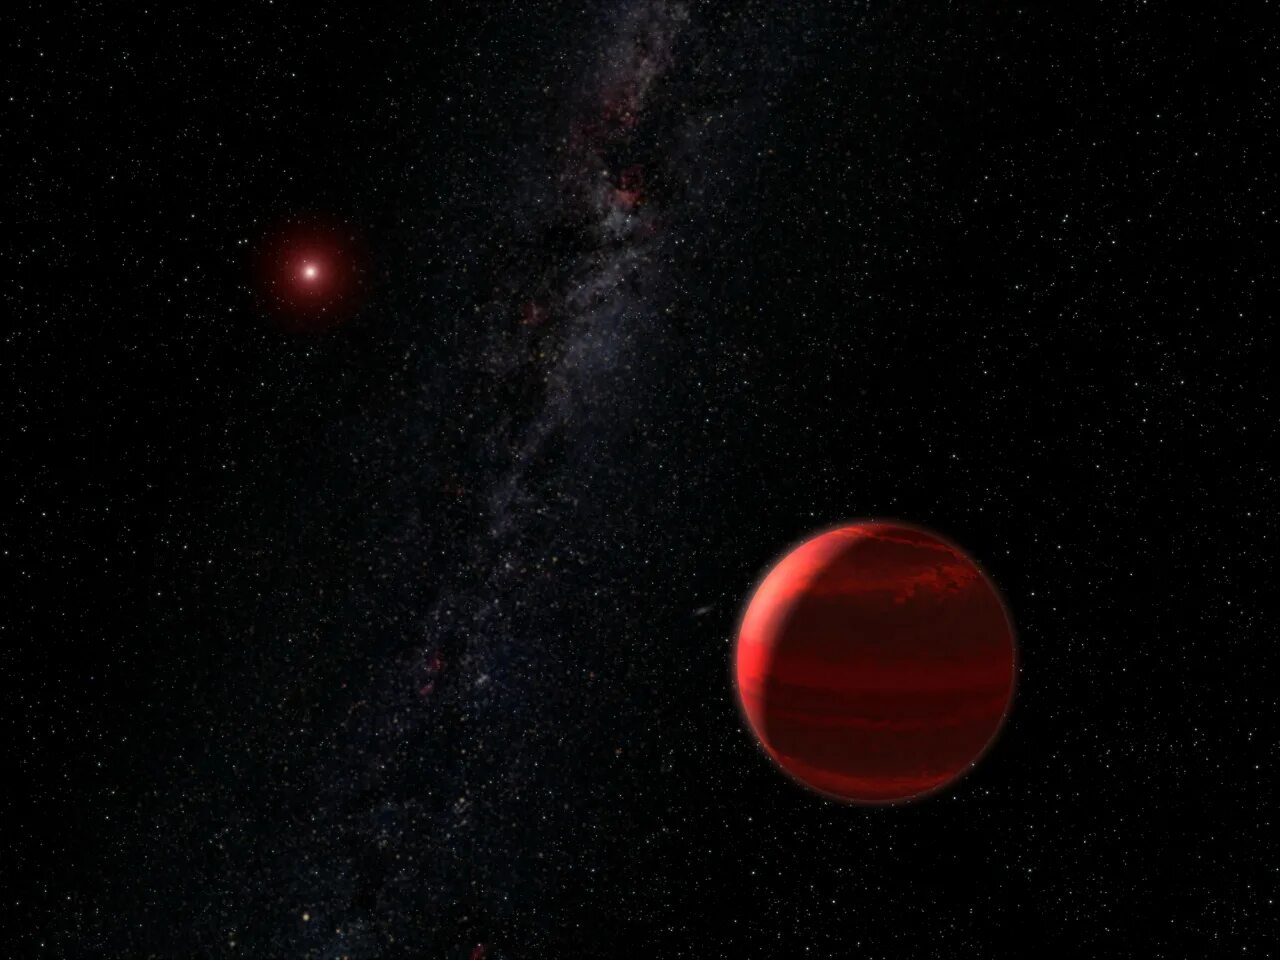 5 звезд карликов. Звезда Барнарда планеты. Лаланд 21185 звезда. Красный карлик звезда. 2mass j2126-8140 Планета.